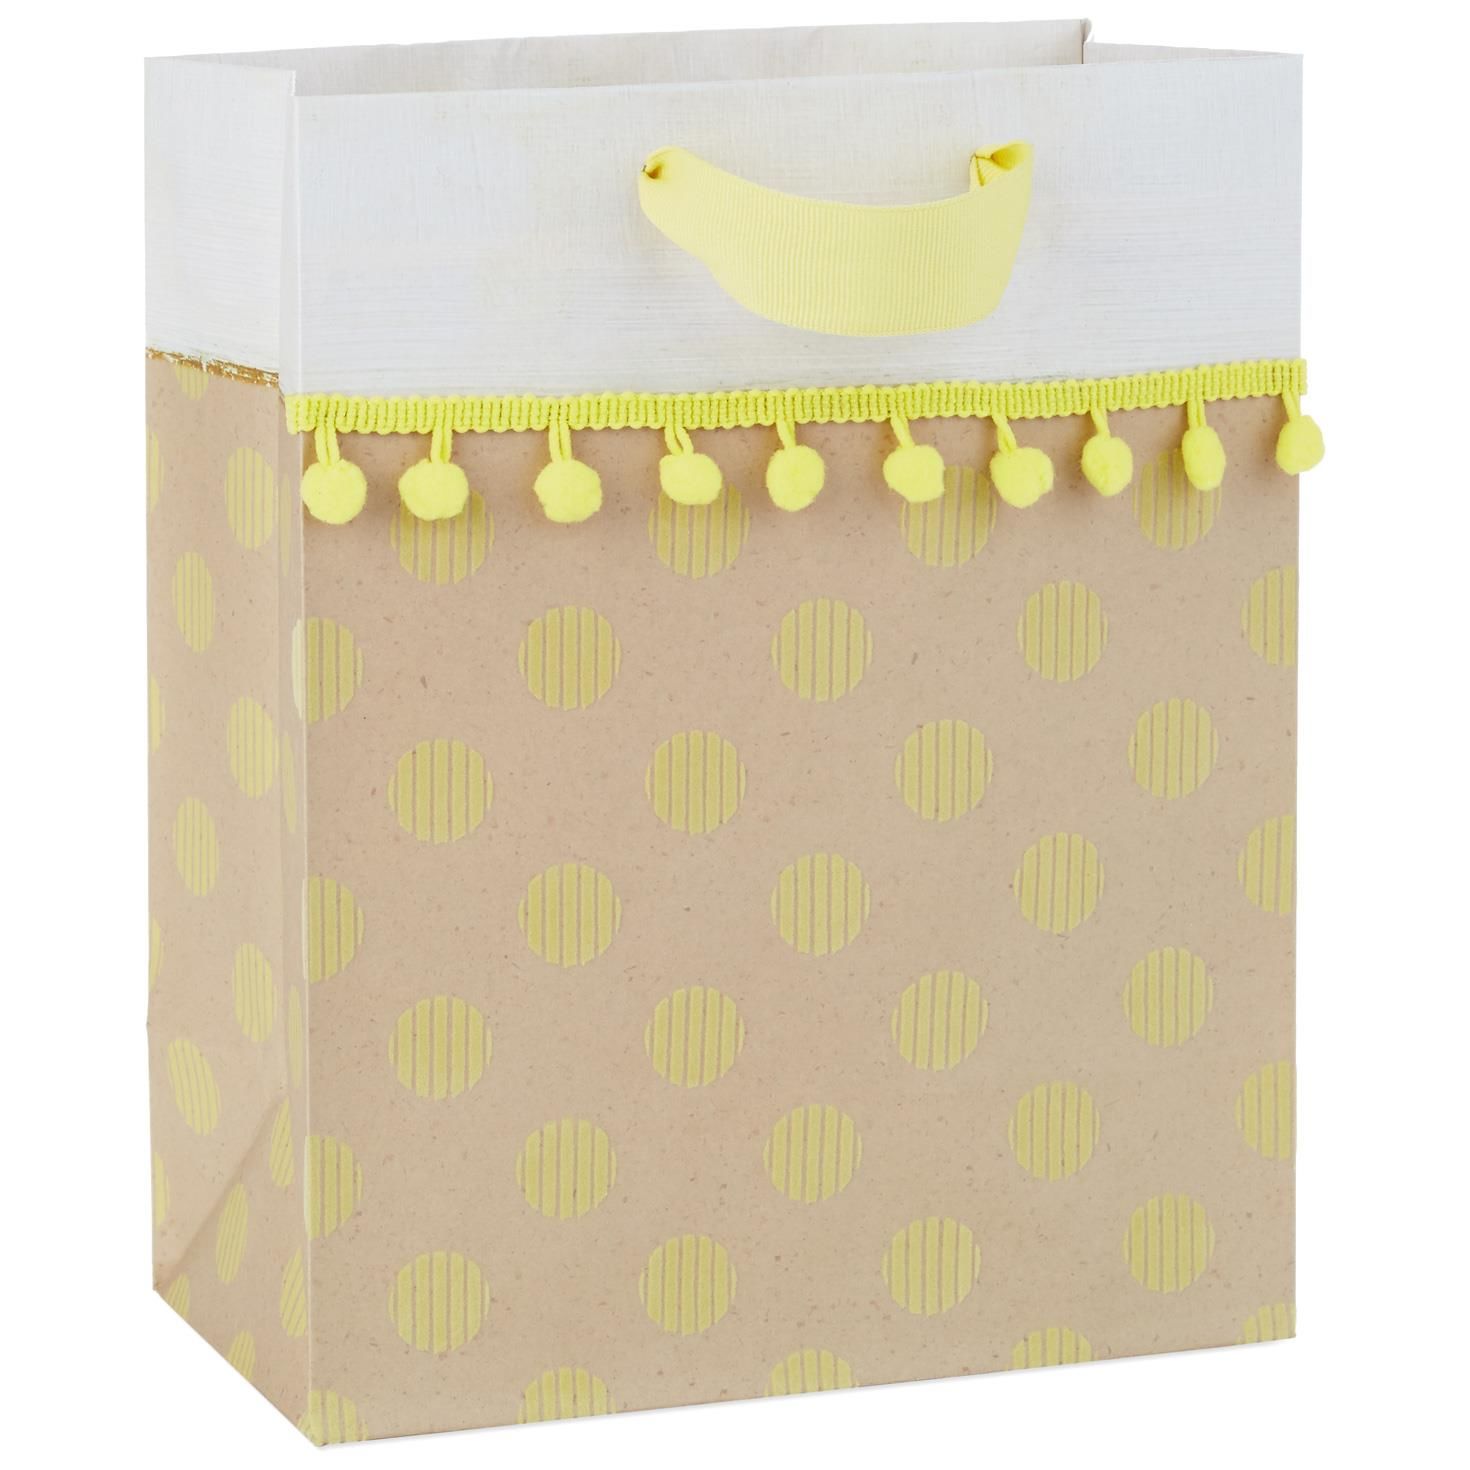 Yellow Dots Medium Gift Bag With Pom Pom Fringe, 9.5